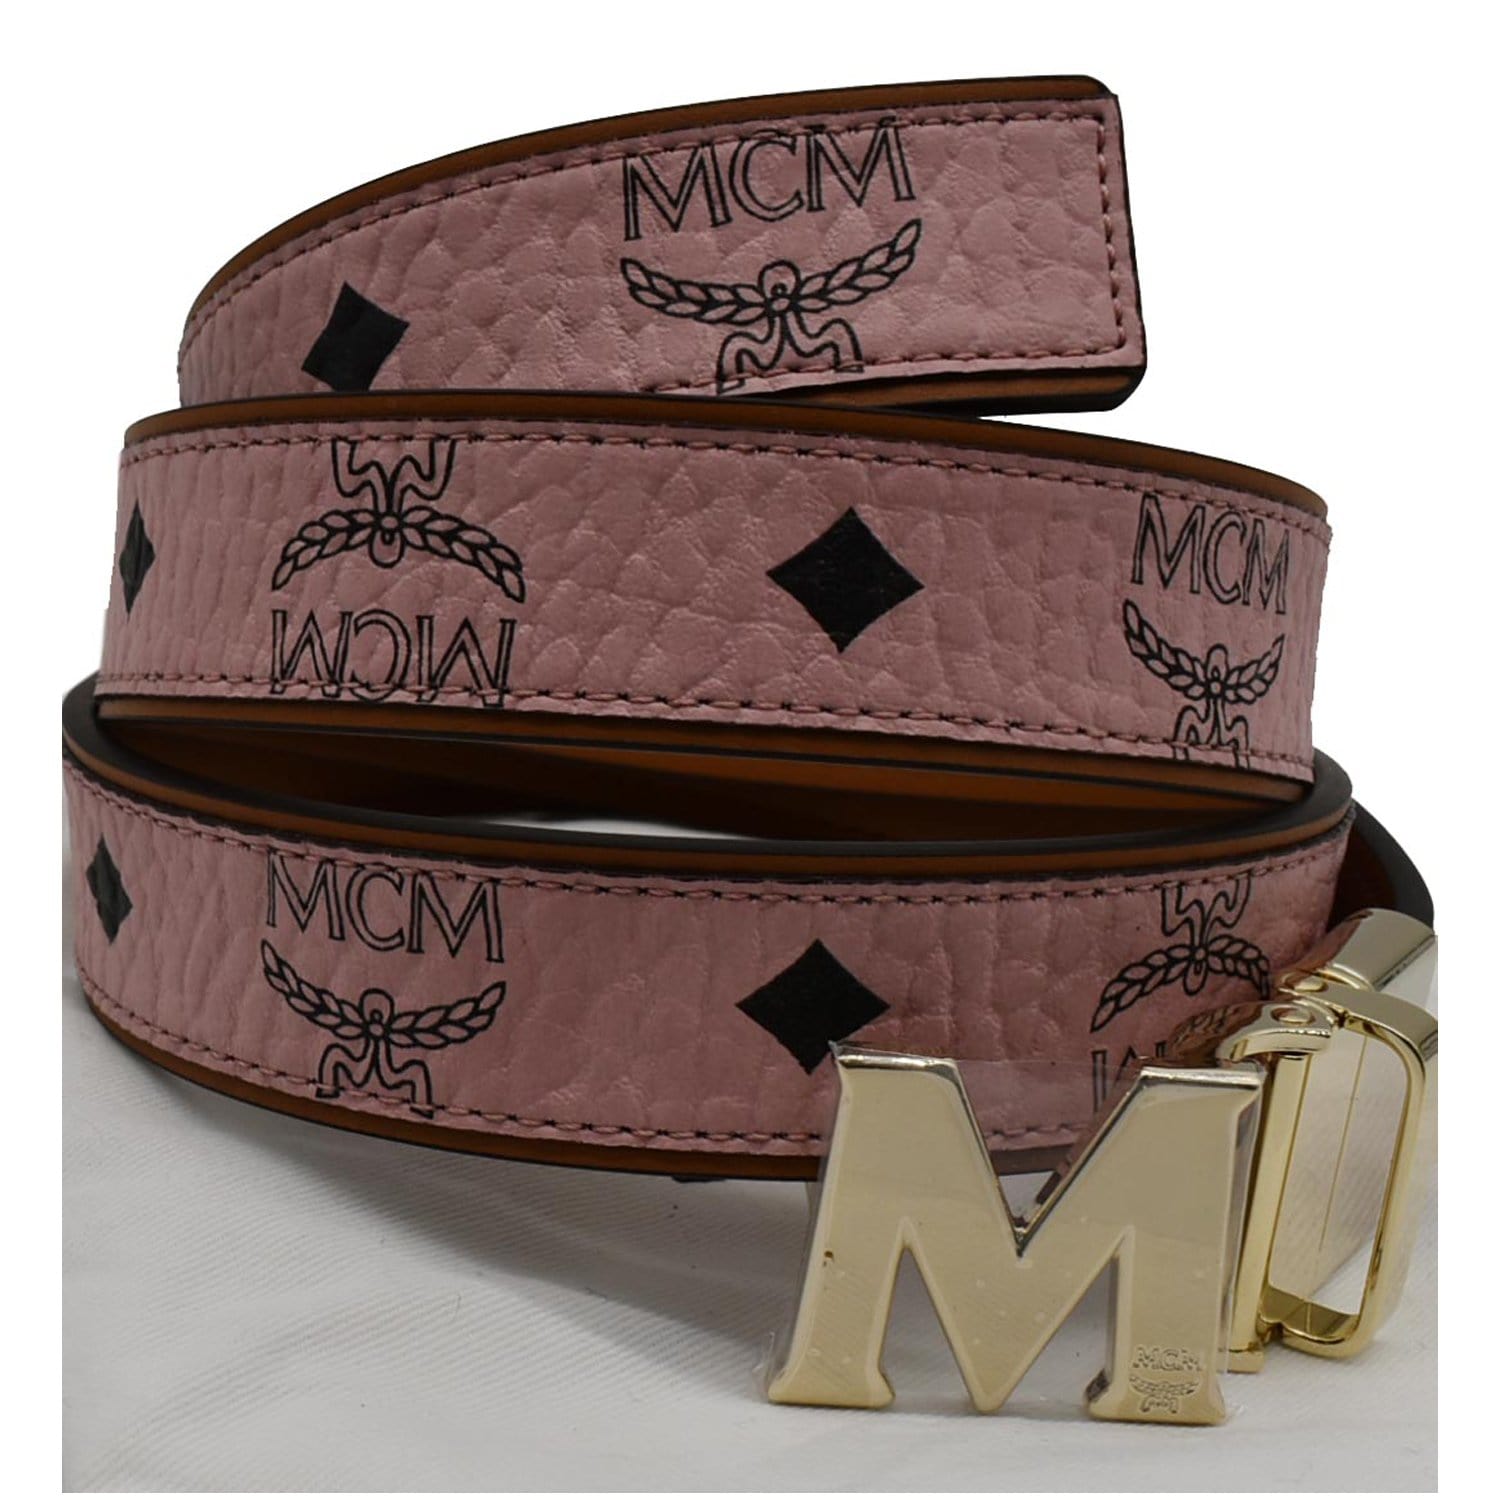 mcm belt on person